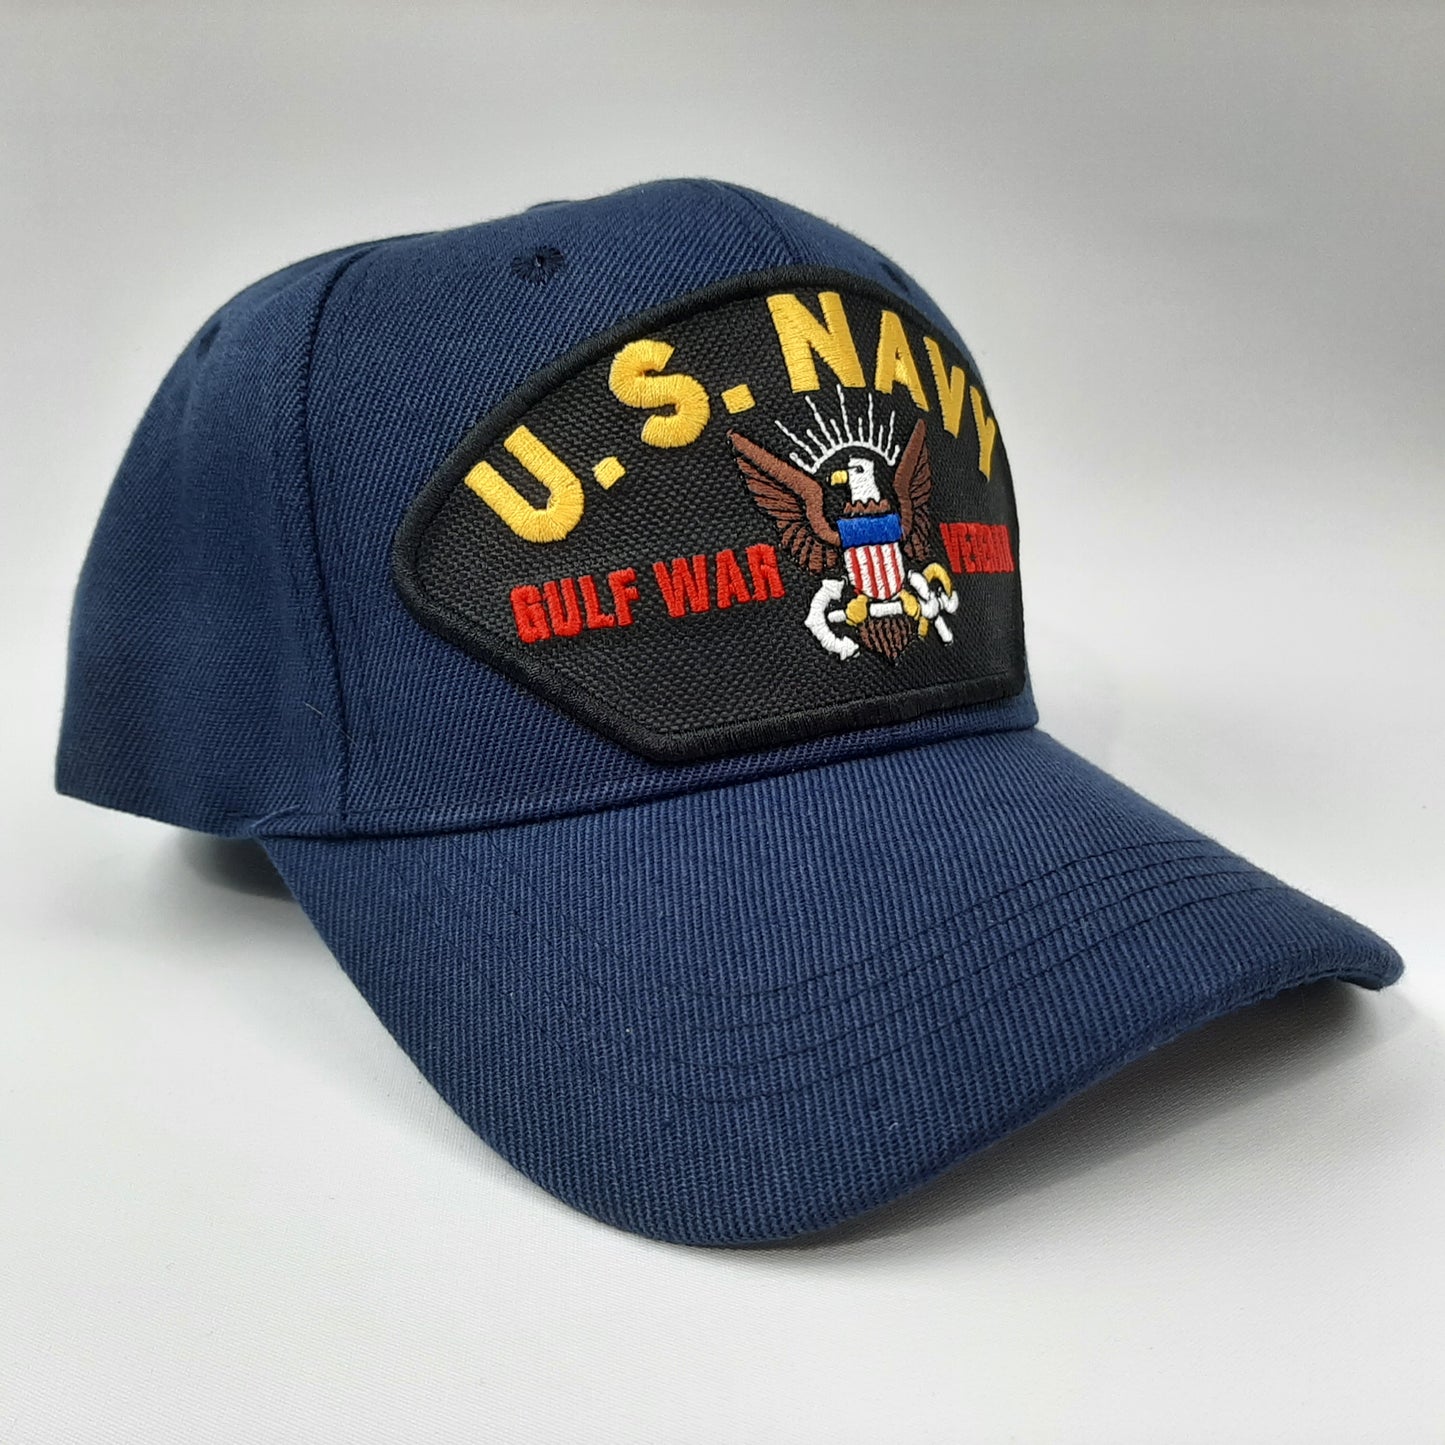 U.S. Navy Gulf War Veteran Men's Ball Cap Hat Blue Embroidered Patch